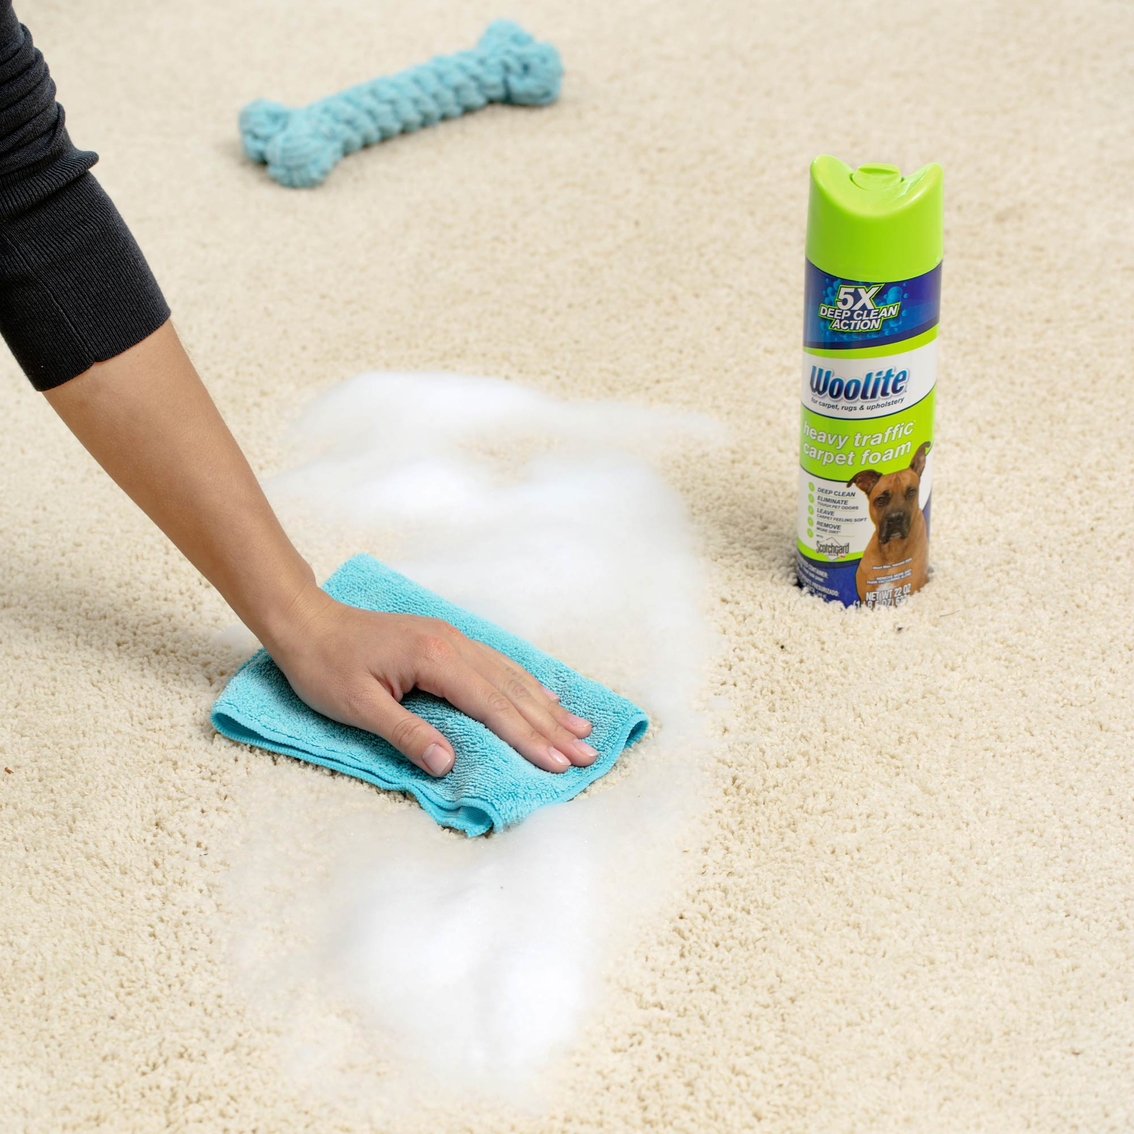 Woolite Foam Carpet Cleaner HEAVY TRAFFIC deep cleans ground-in